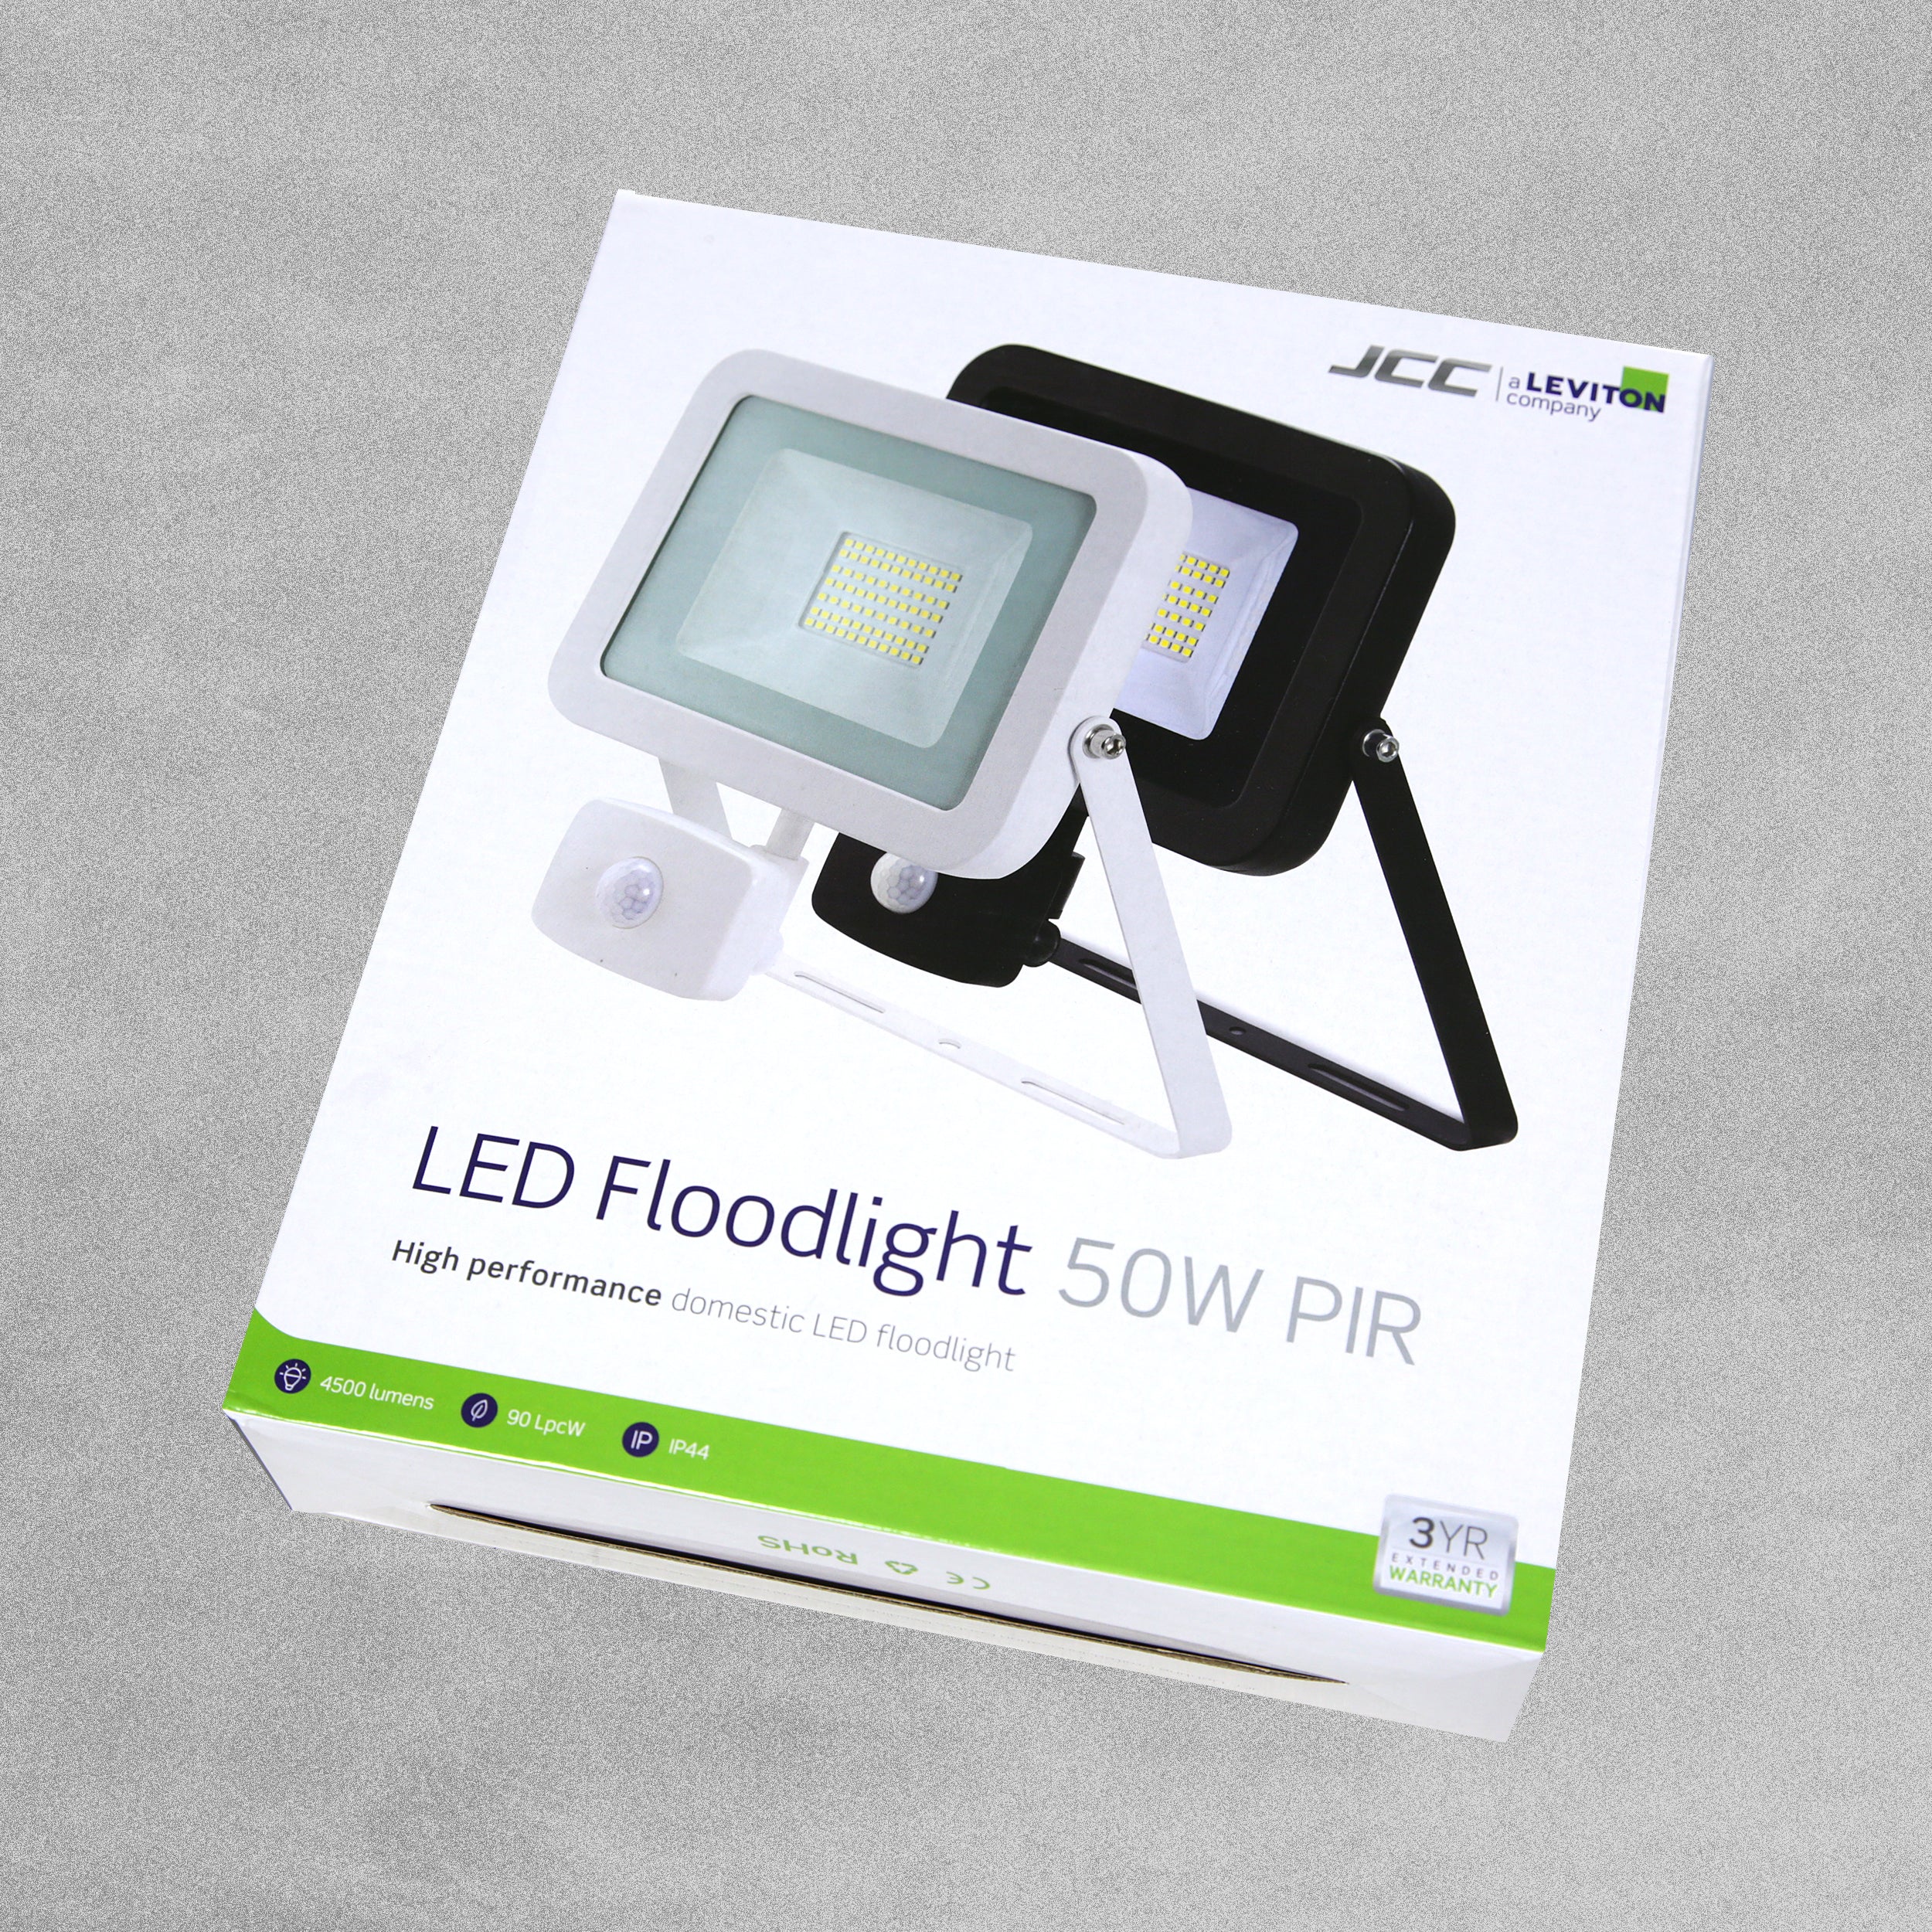 JCC LED Domestic Floodlight 50W PIR 4500 Lumens 90LpcW IP44 - White